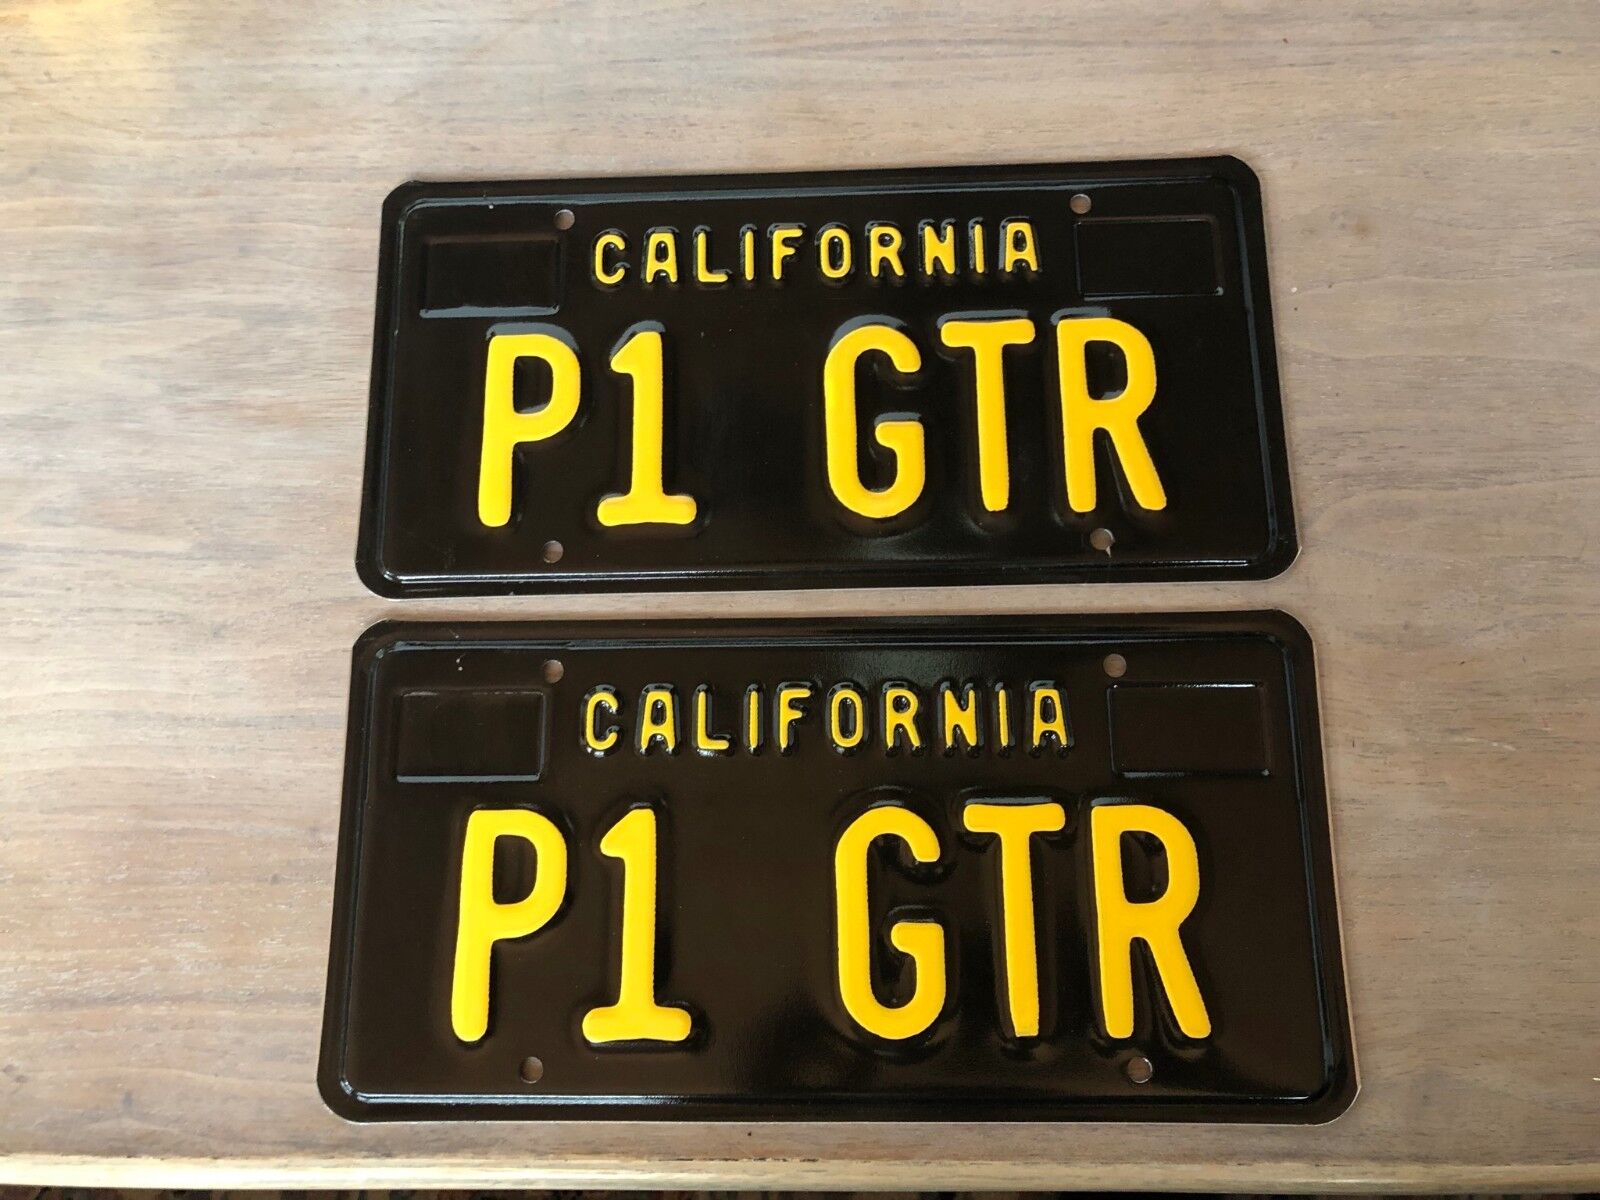 California License Plate P1 GTR - brand new condition 